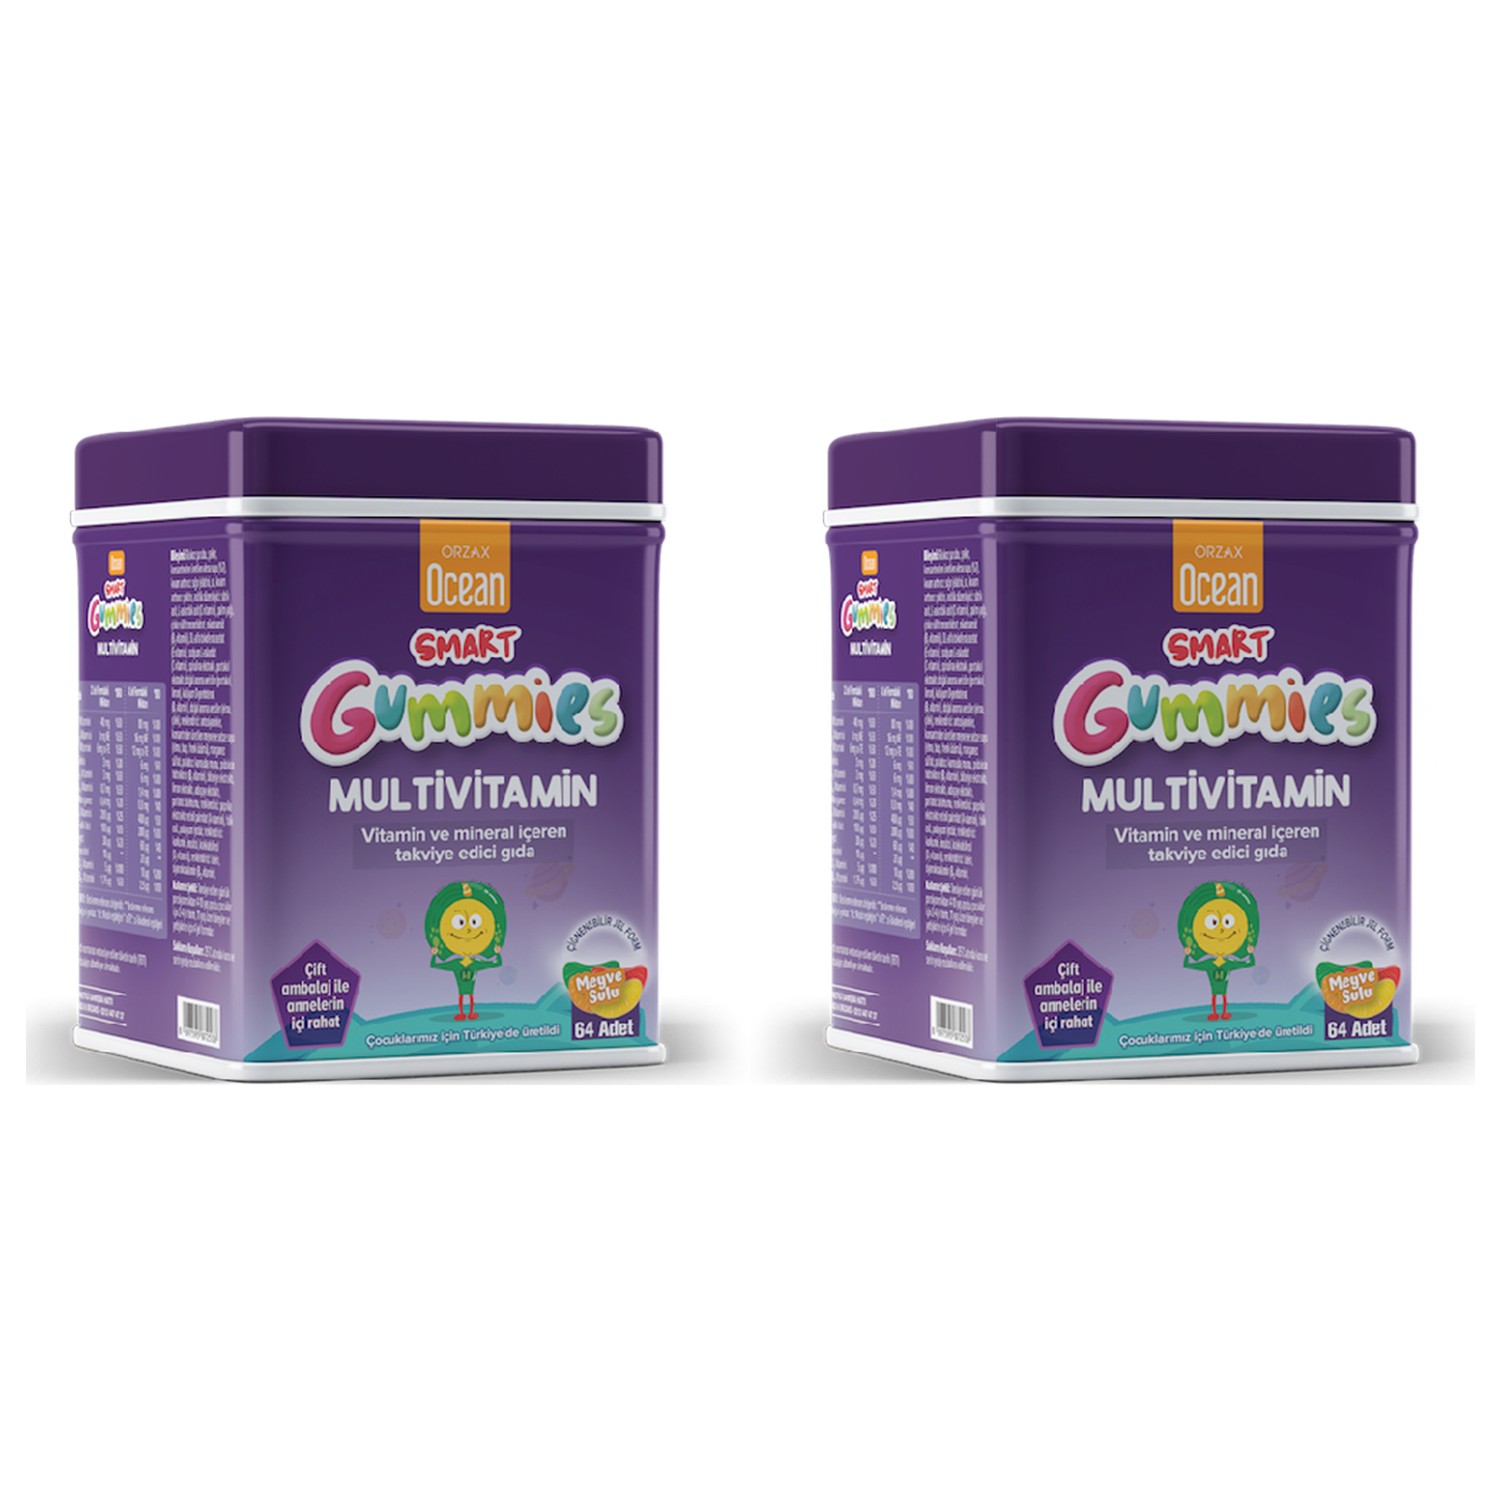 Пищевая добавка Orzax Ocean Smart Gummies Multivitamin Clenchable, 2 упаковки по 64 таблетки gaia herbs kids everyday elderberry gummies 40 vegan gummies